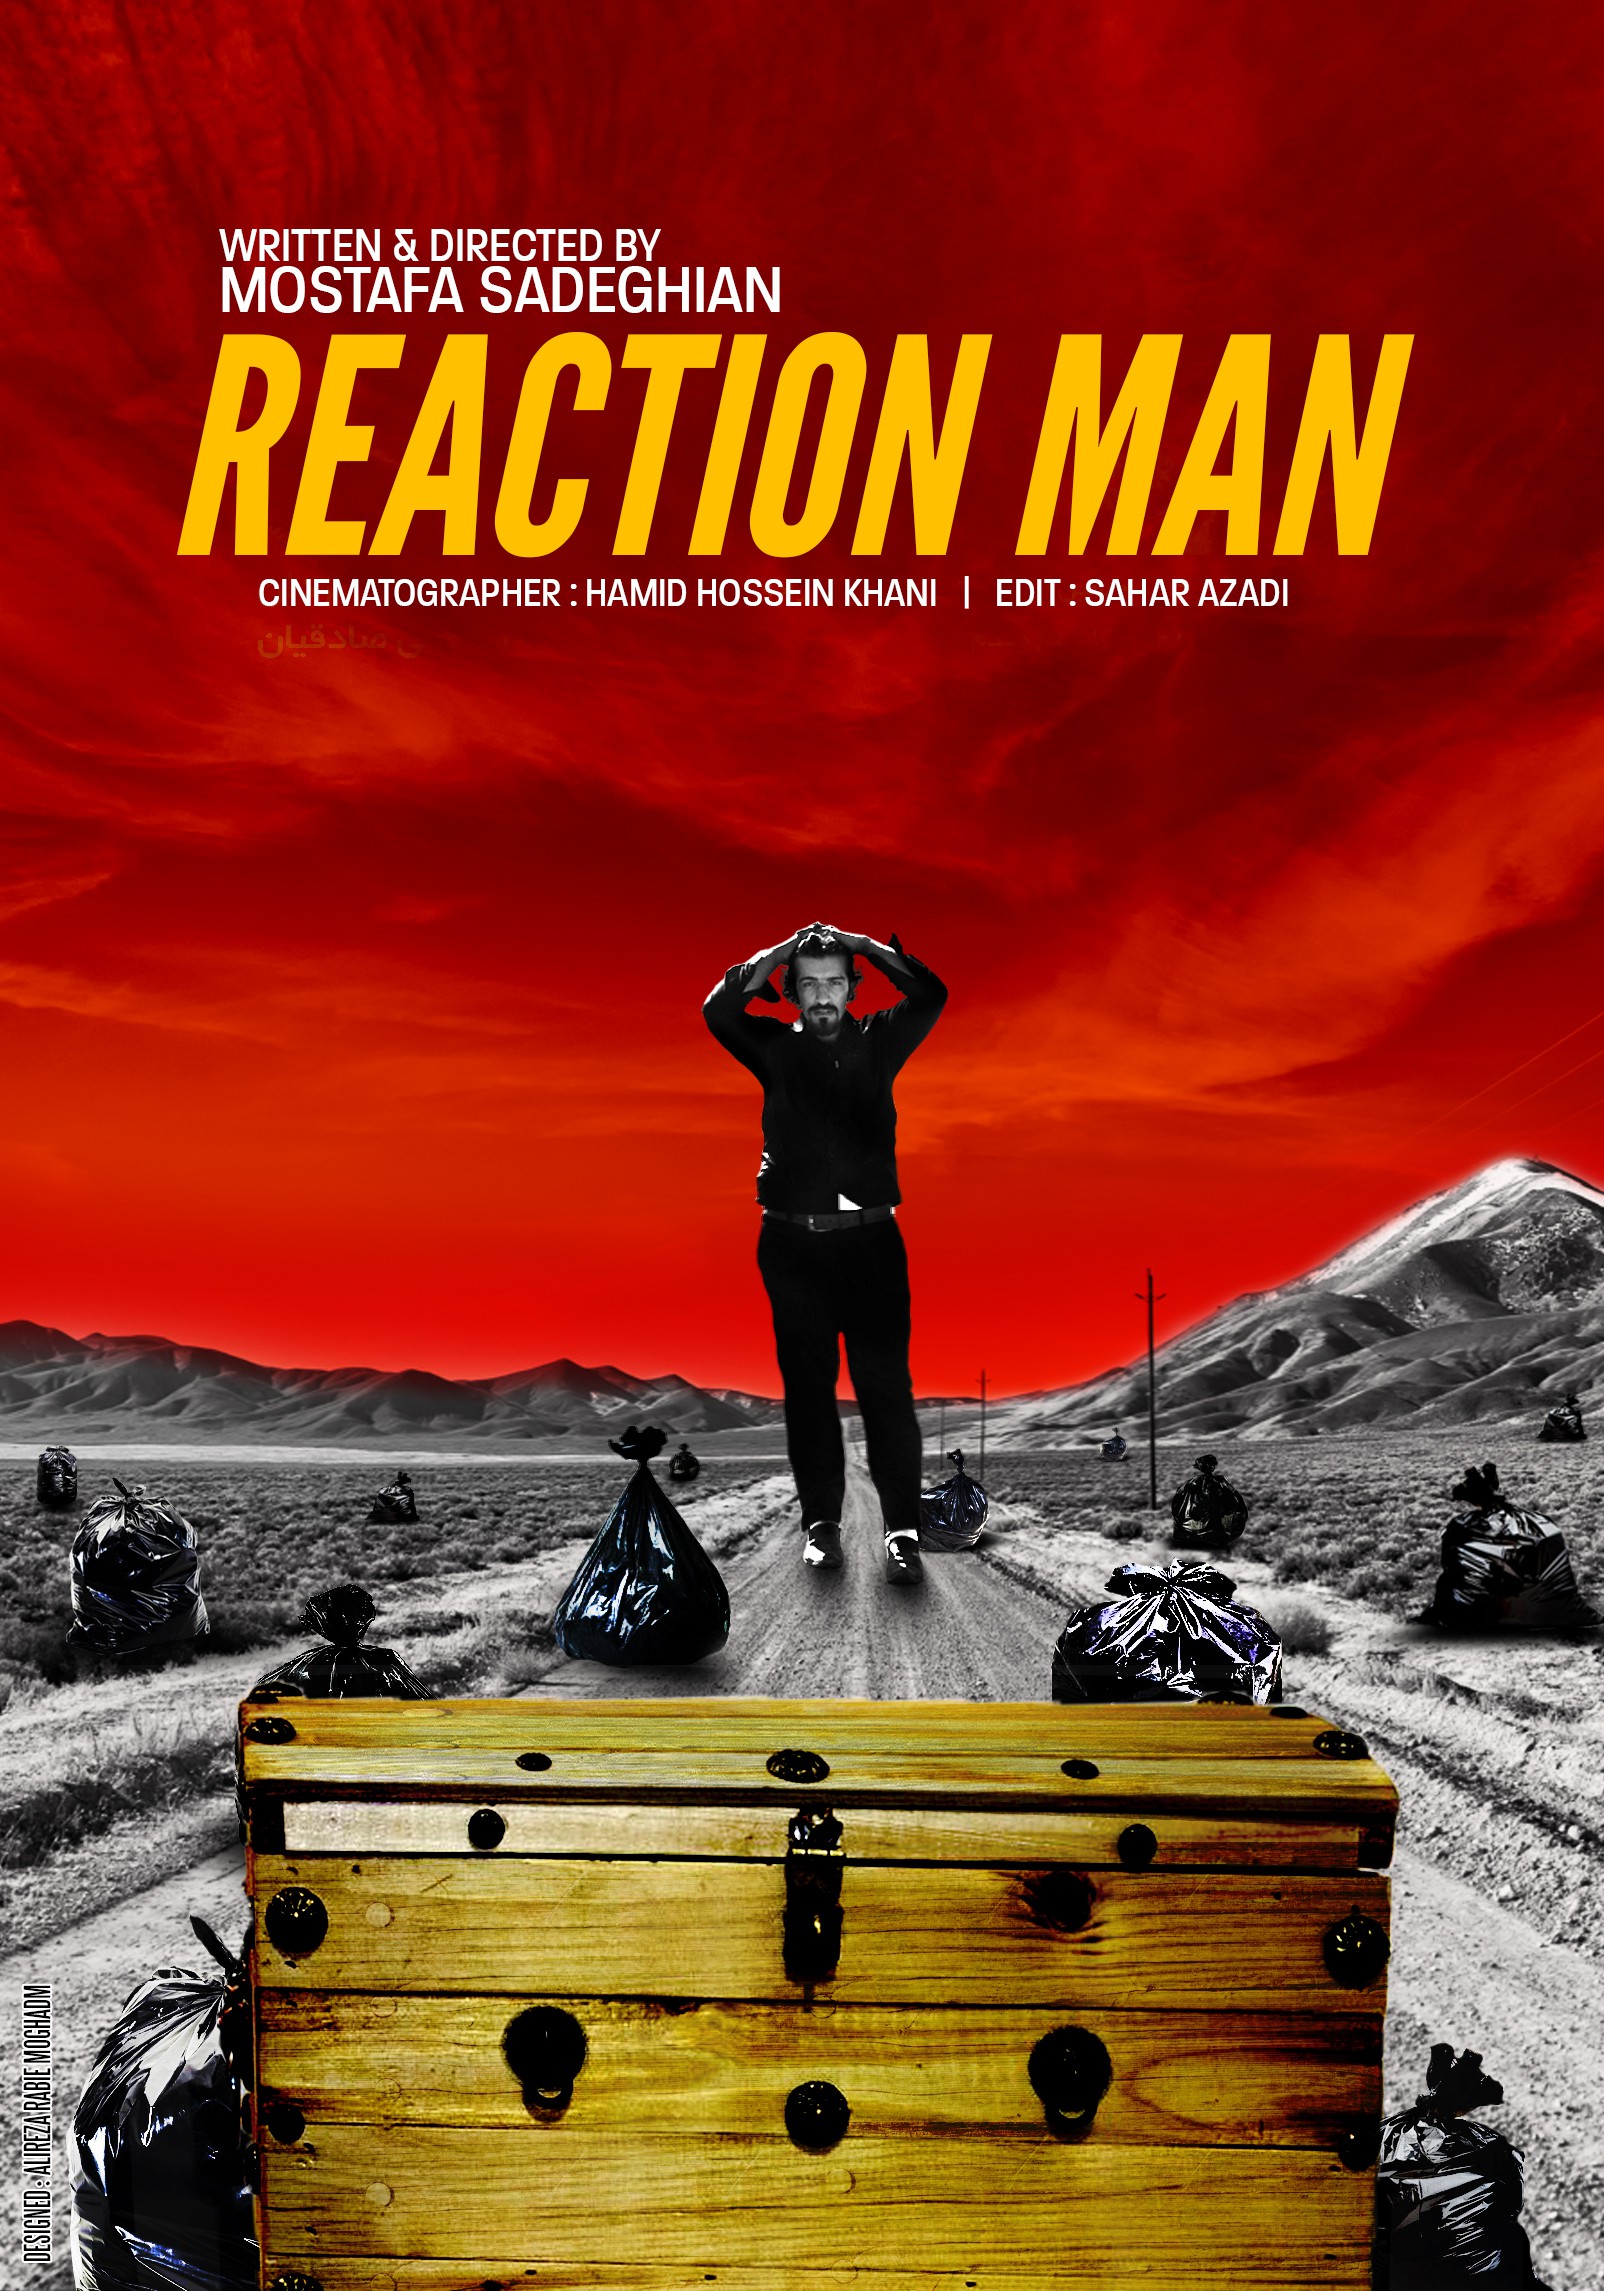 Mega Sized Movie Poster Image for Reaction Man